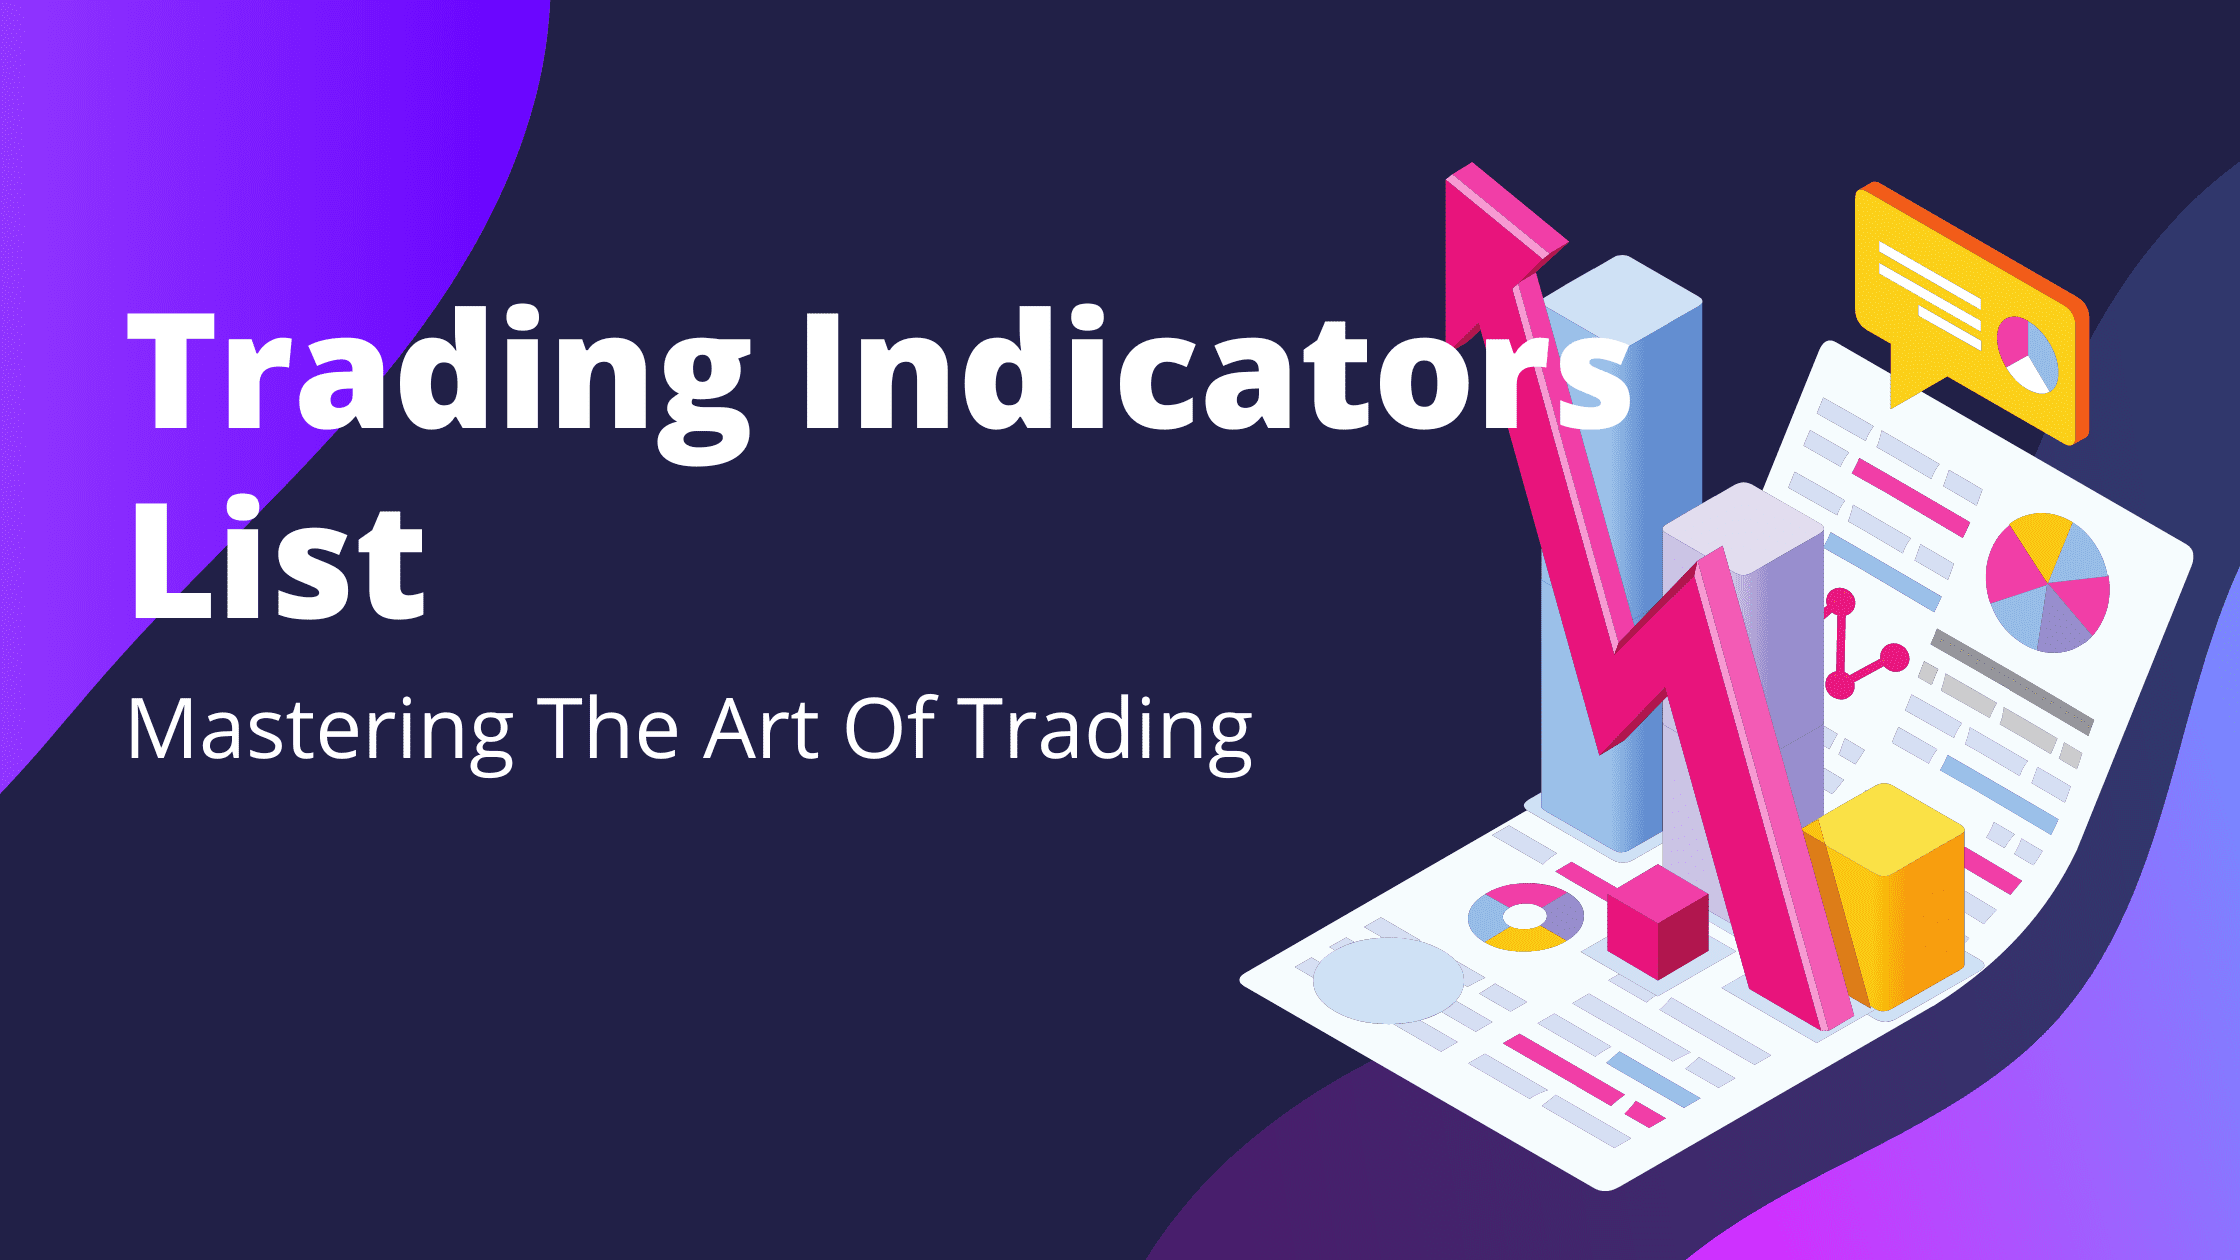 Trading Indicators List: Mastering The Art Of Trading